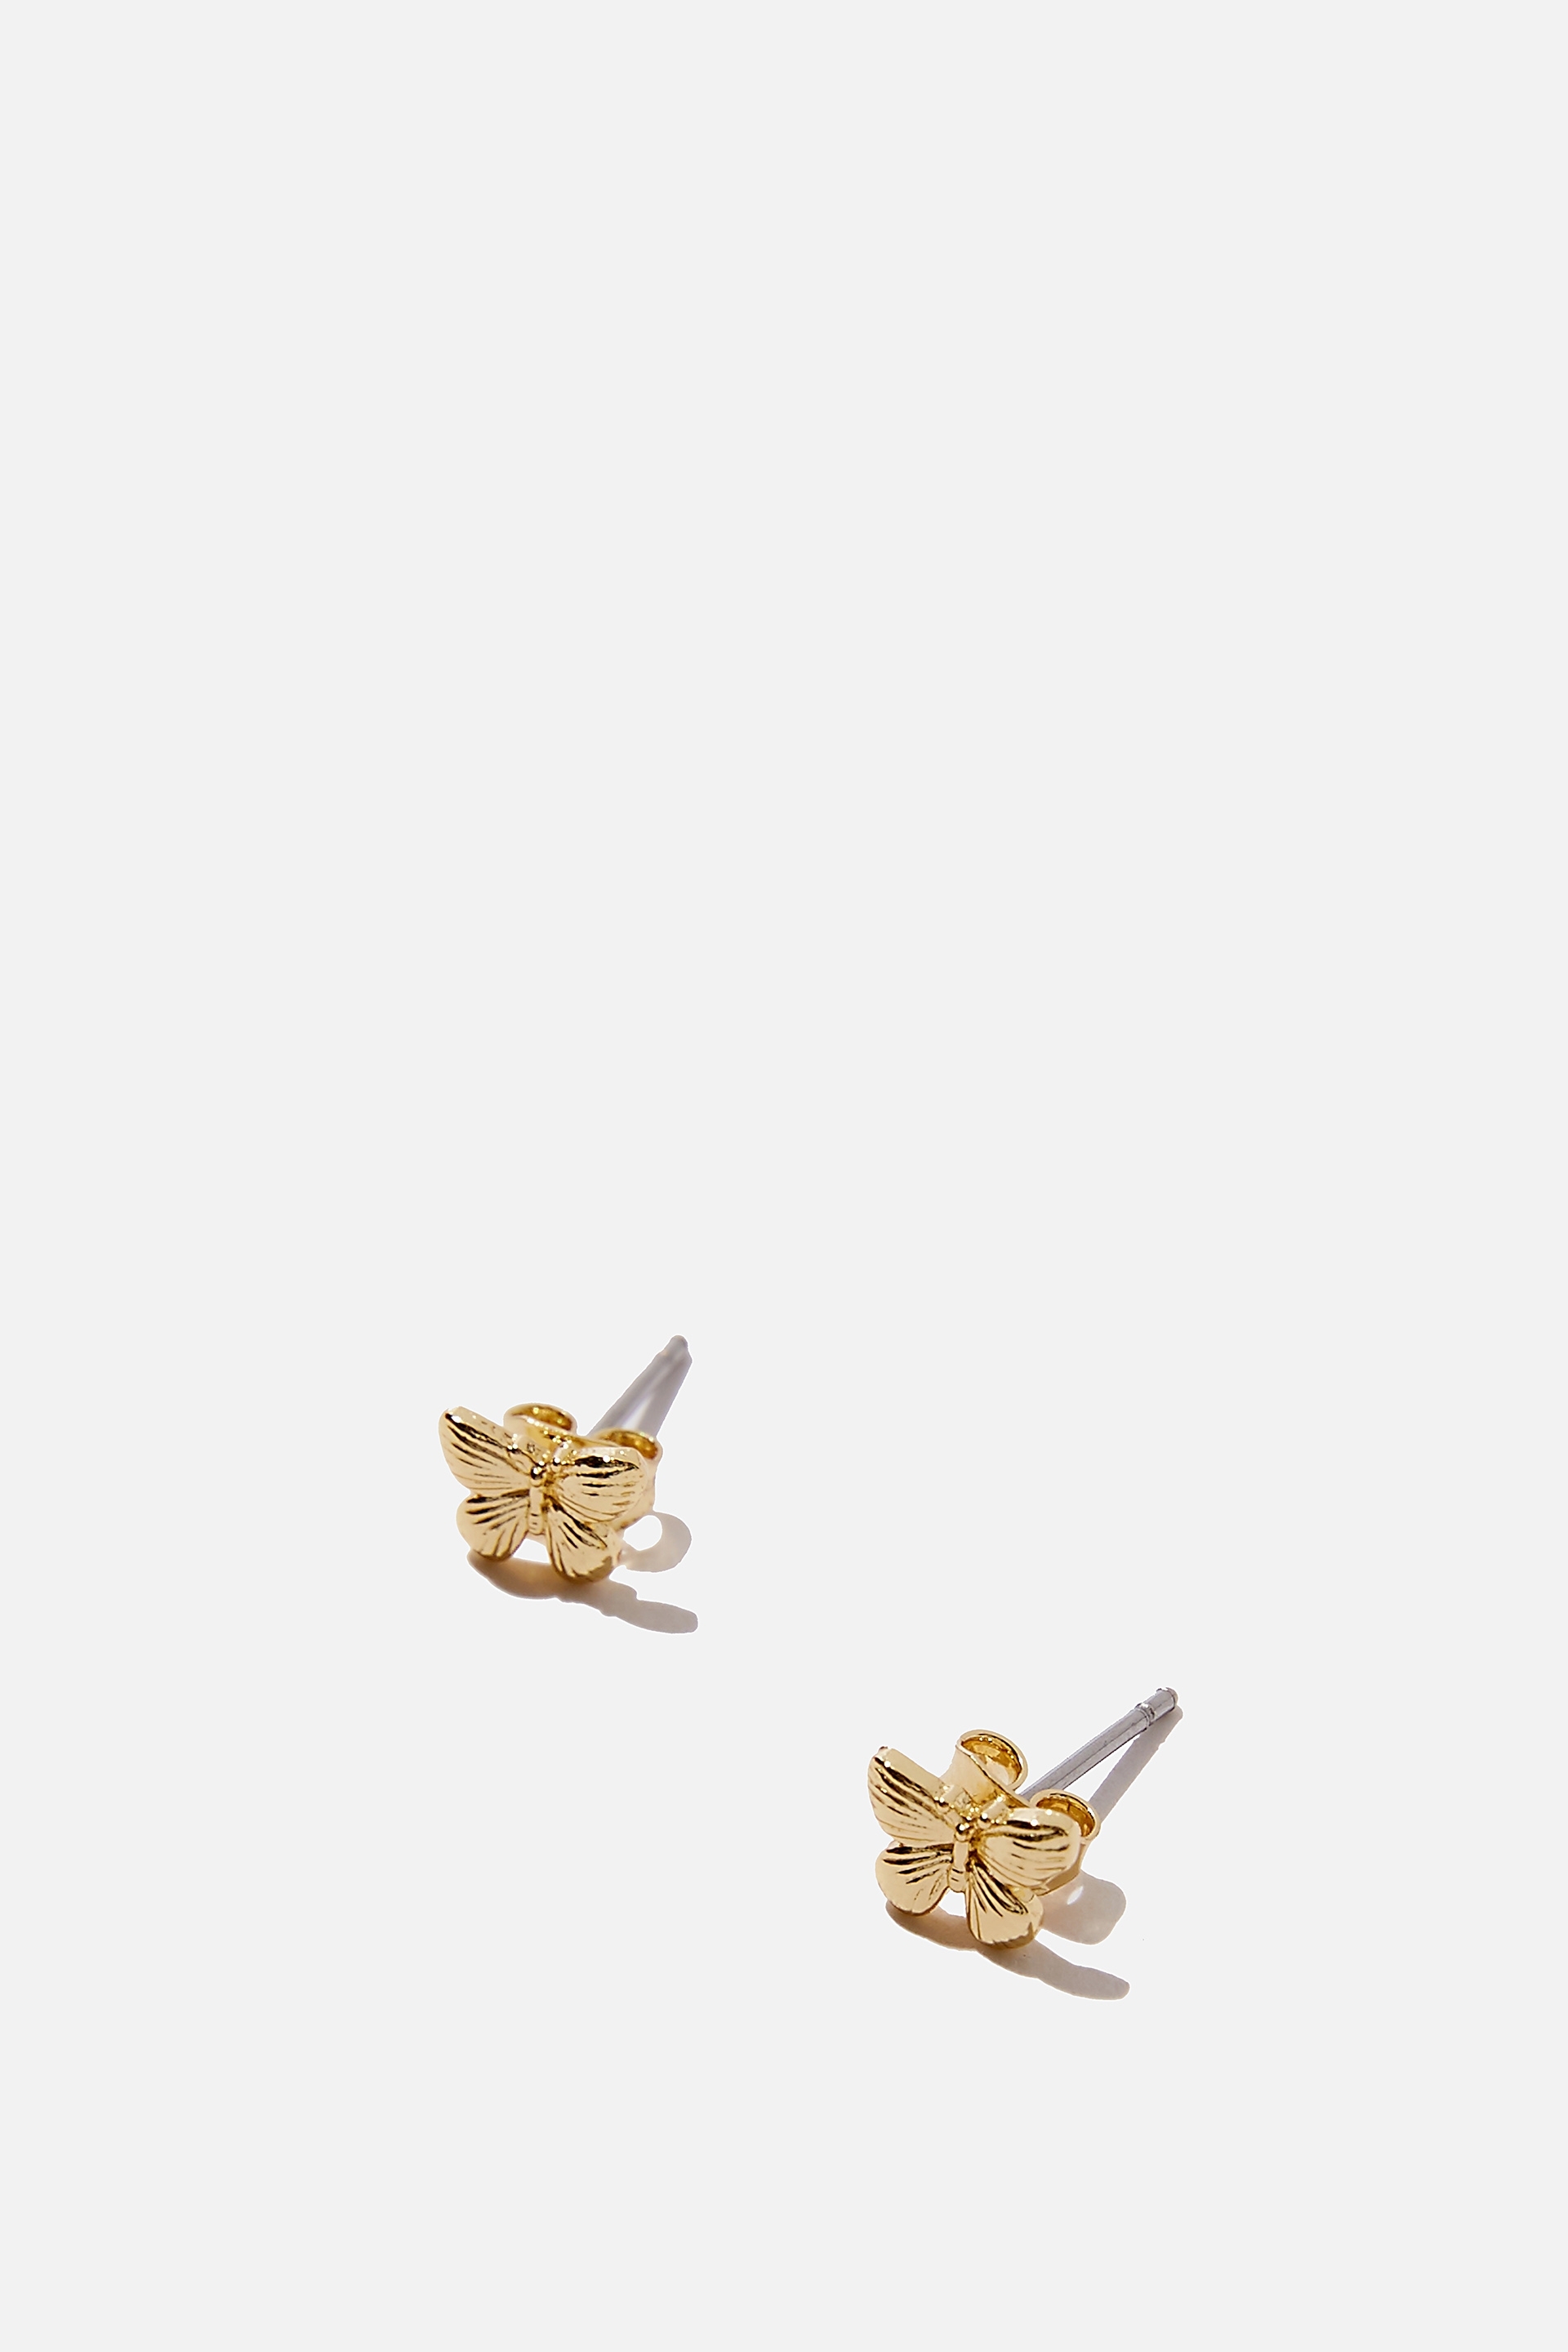 Rubi - Premium Stud Earrings - Gold plated butterfly